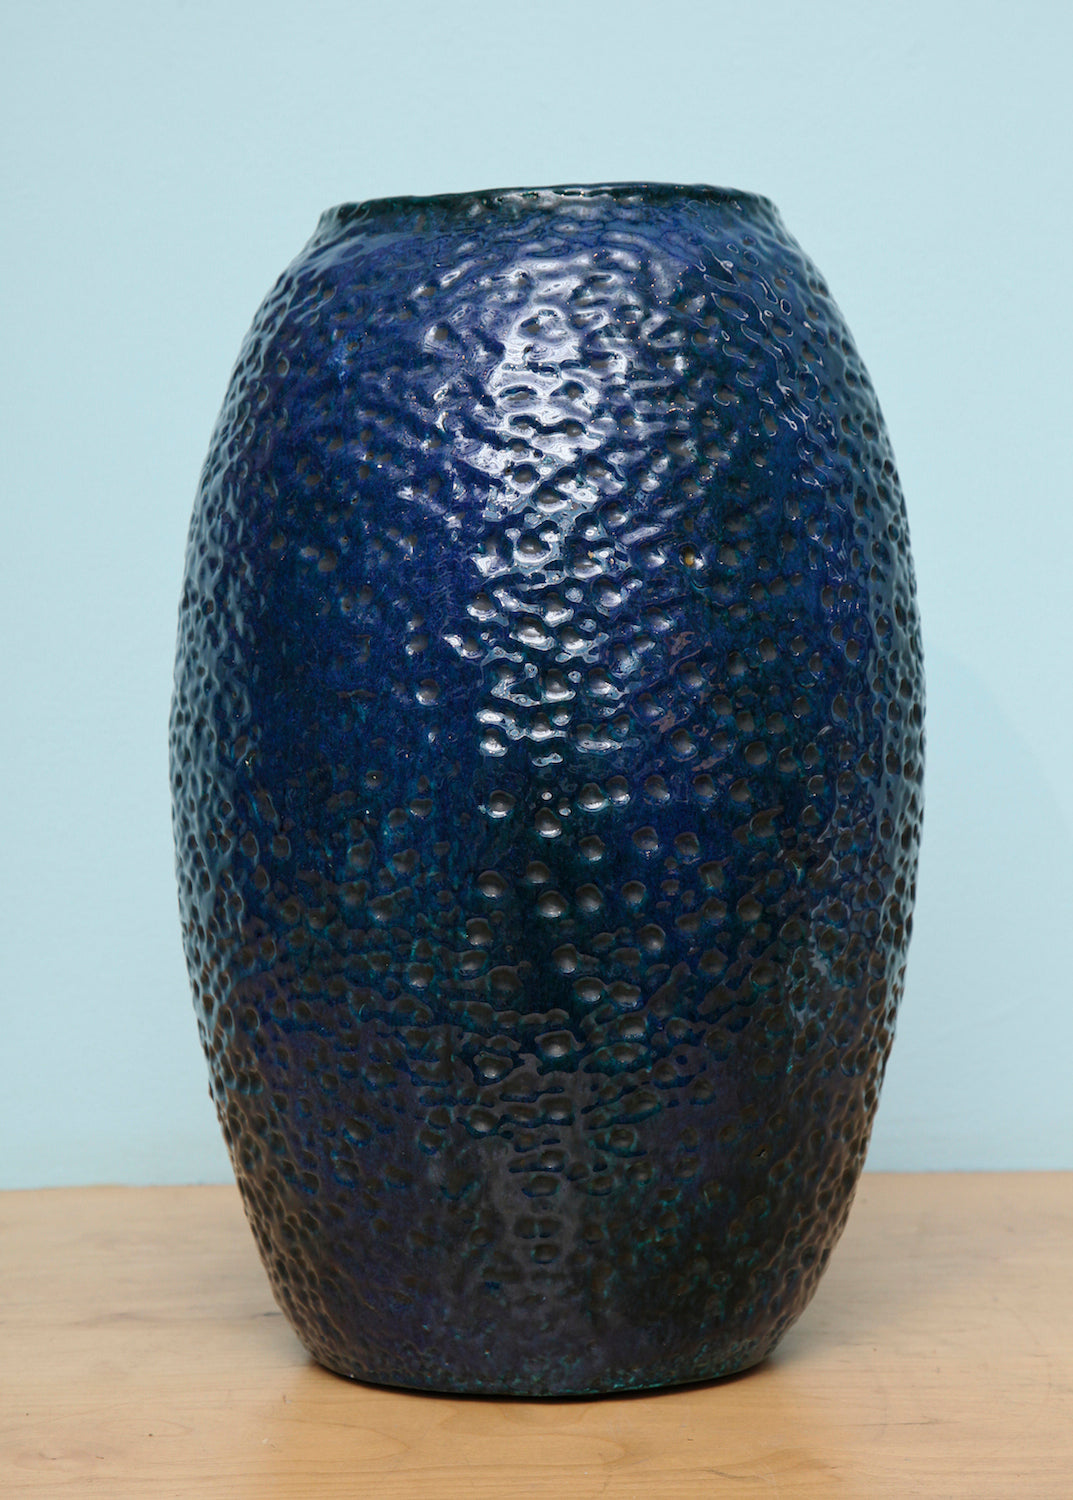 Large-Scale Studio-Made Vase by Marcello Fantoni